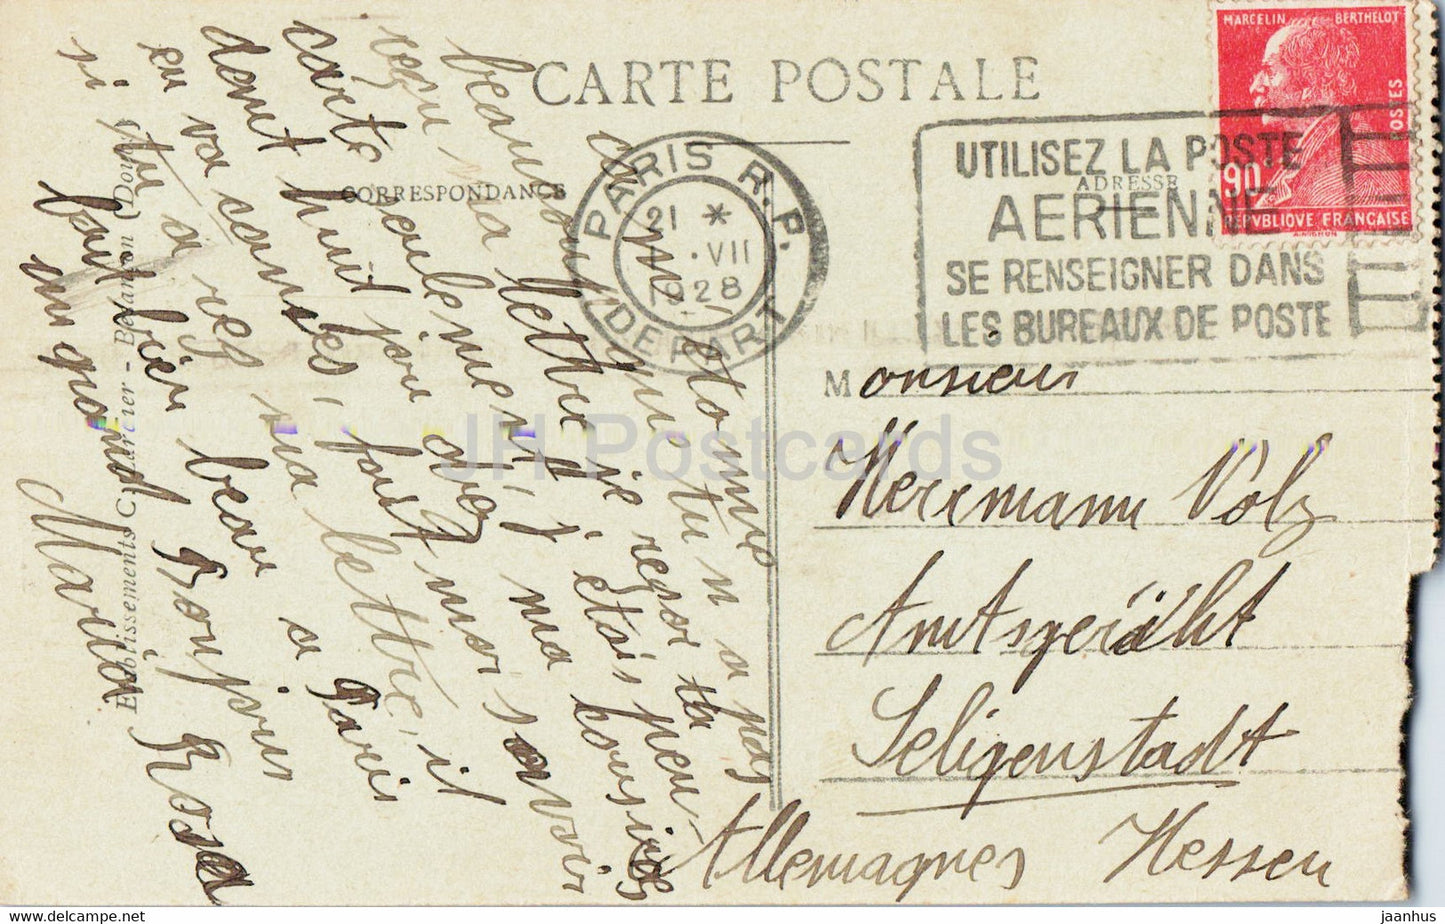 L'Isle sur le Doubs - Cites Meiner - alte Postkarte - 1928 - Frankreich - gebraucht